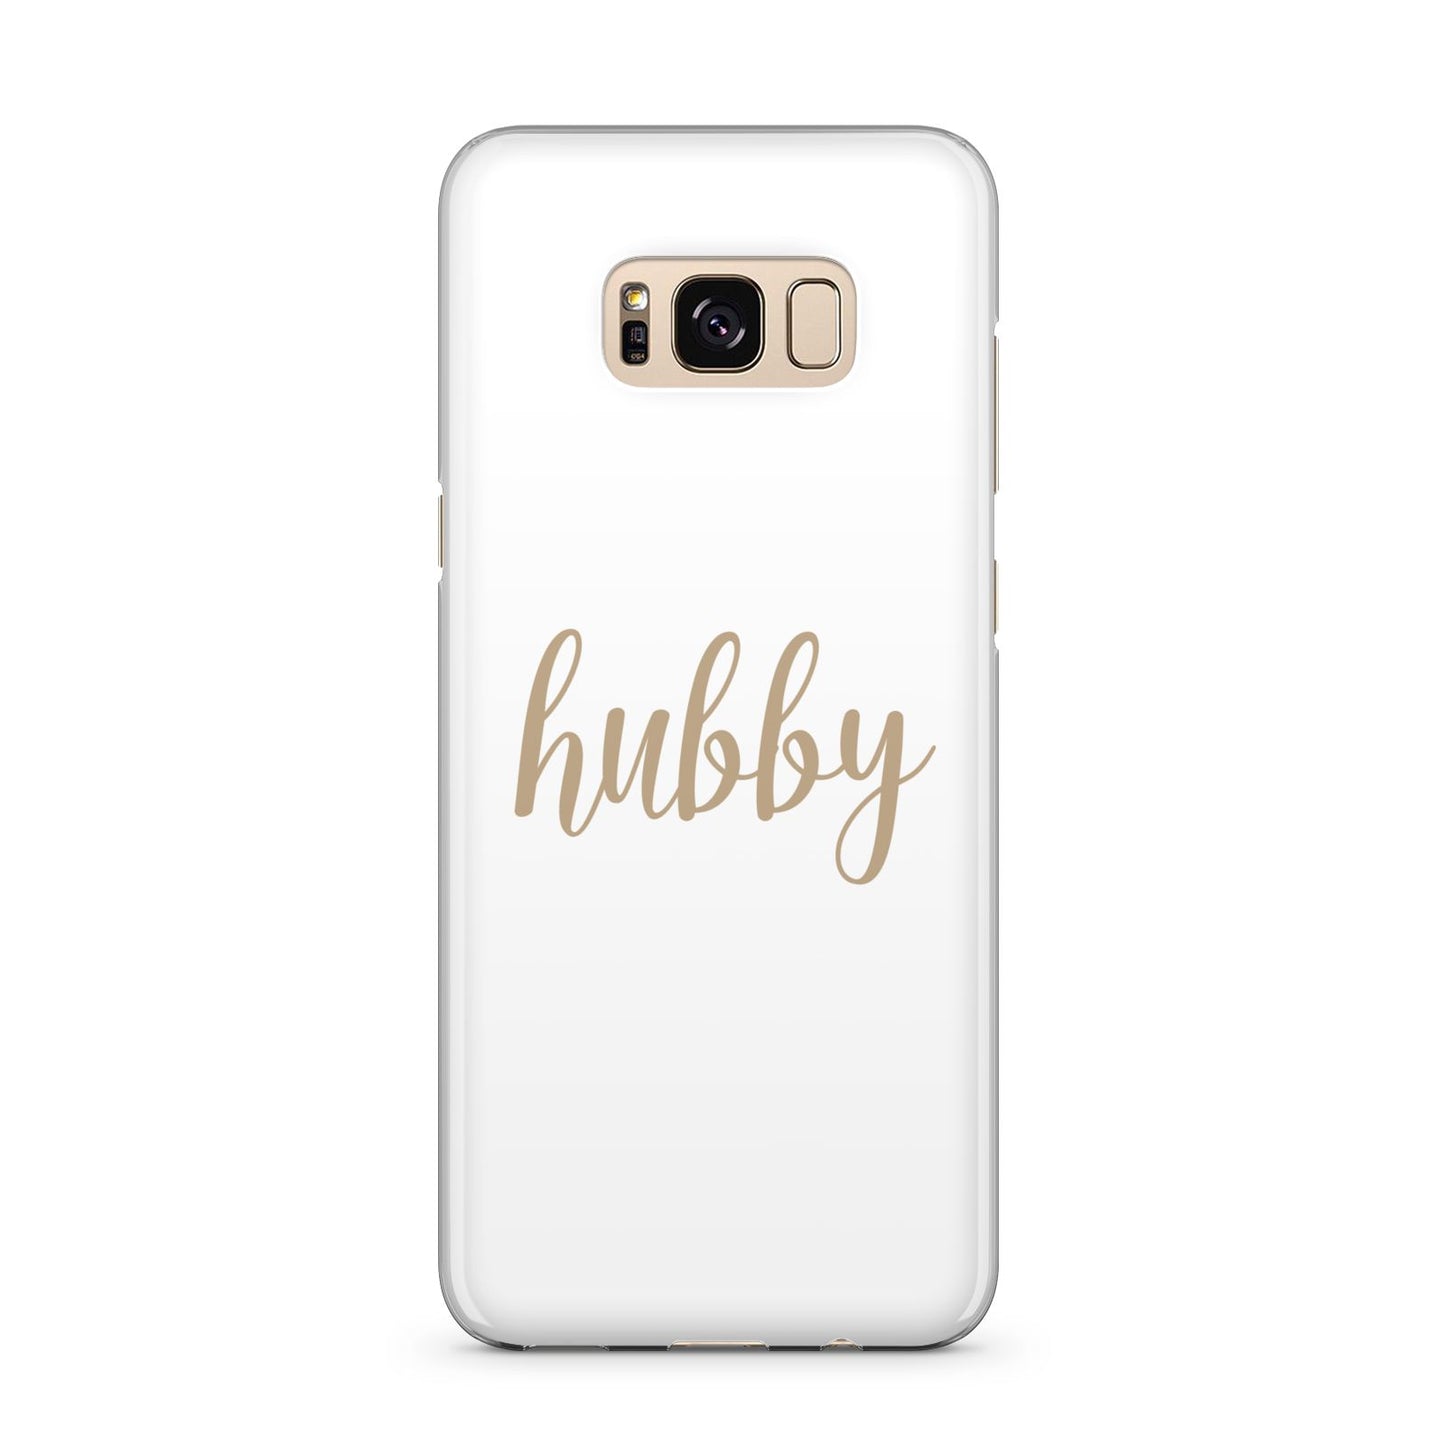 Hubby Samsung Galaxy S8 Plus Case